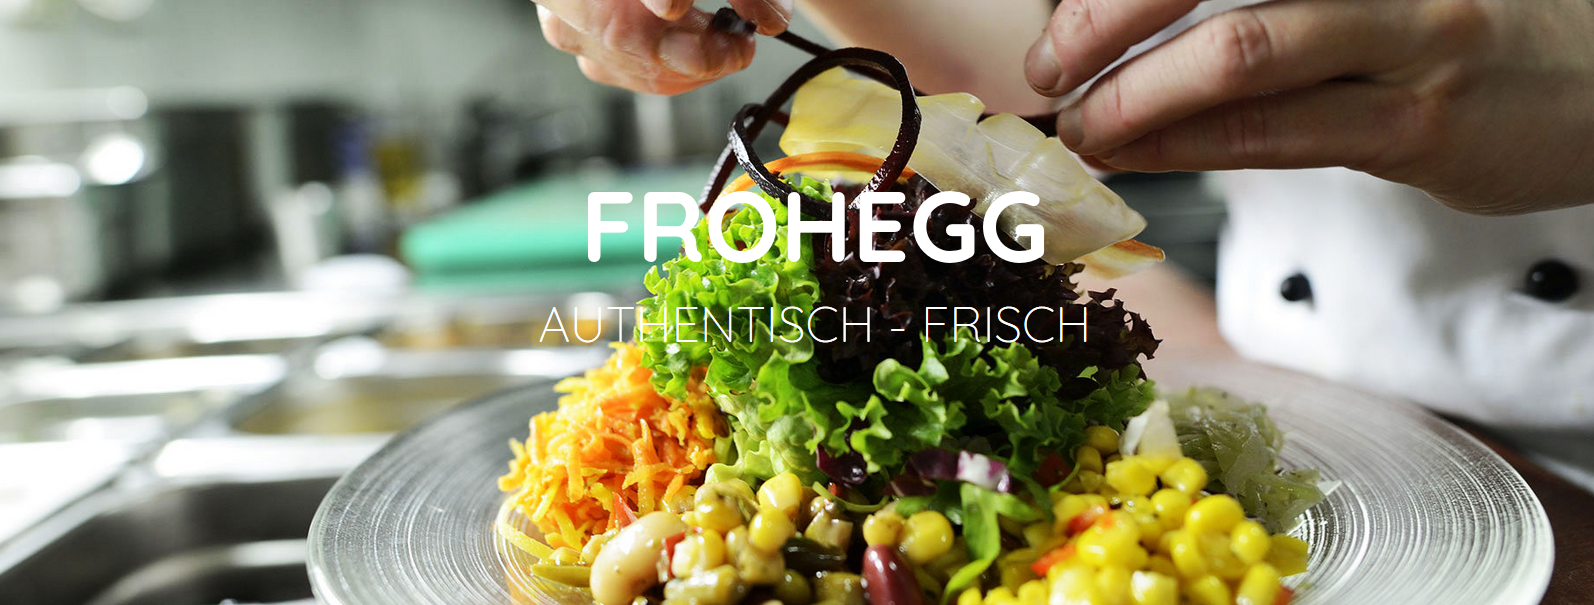 Bilder Restaurant Frohegg